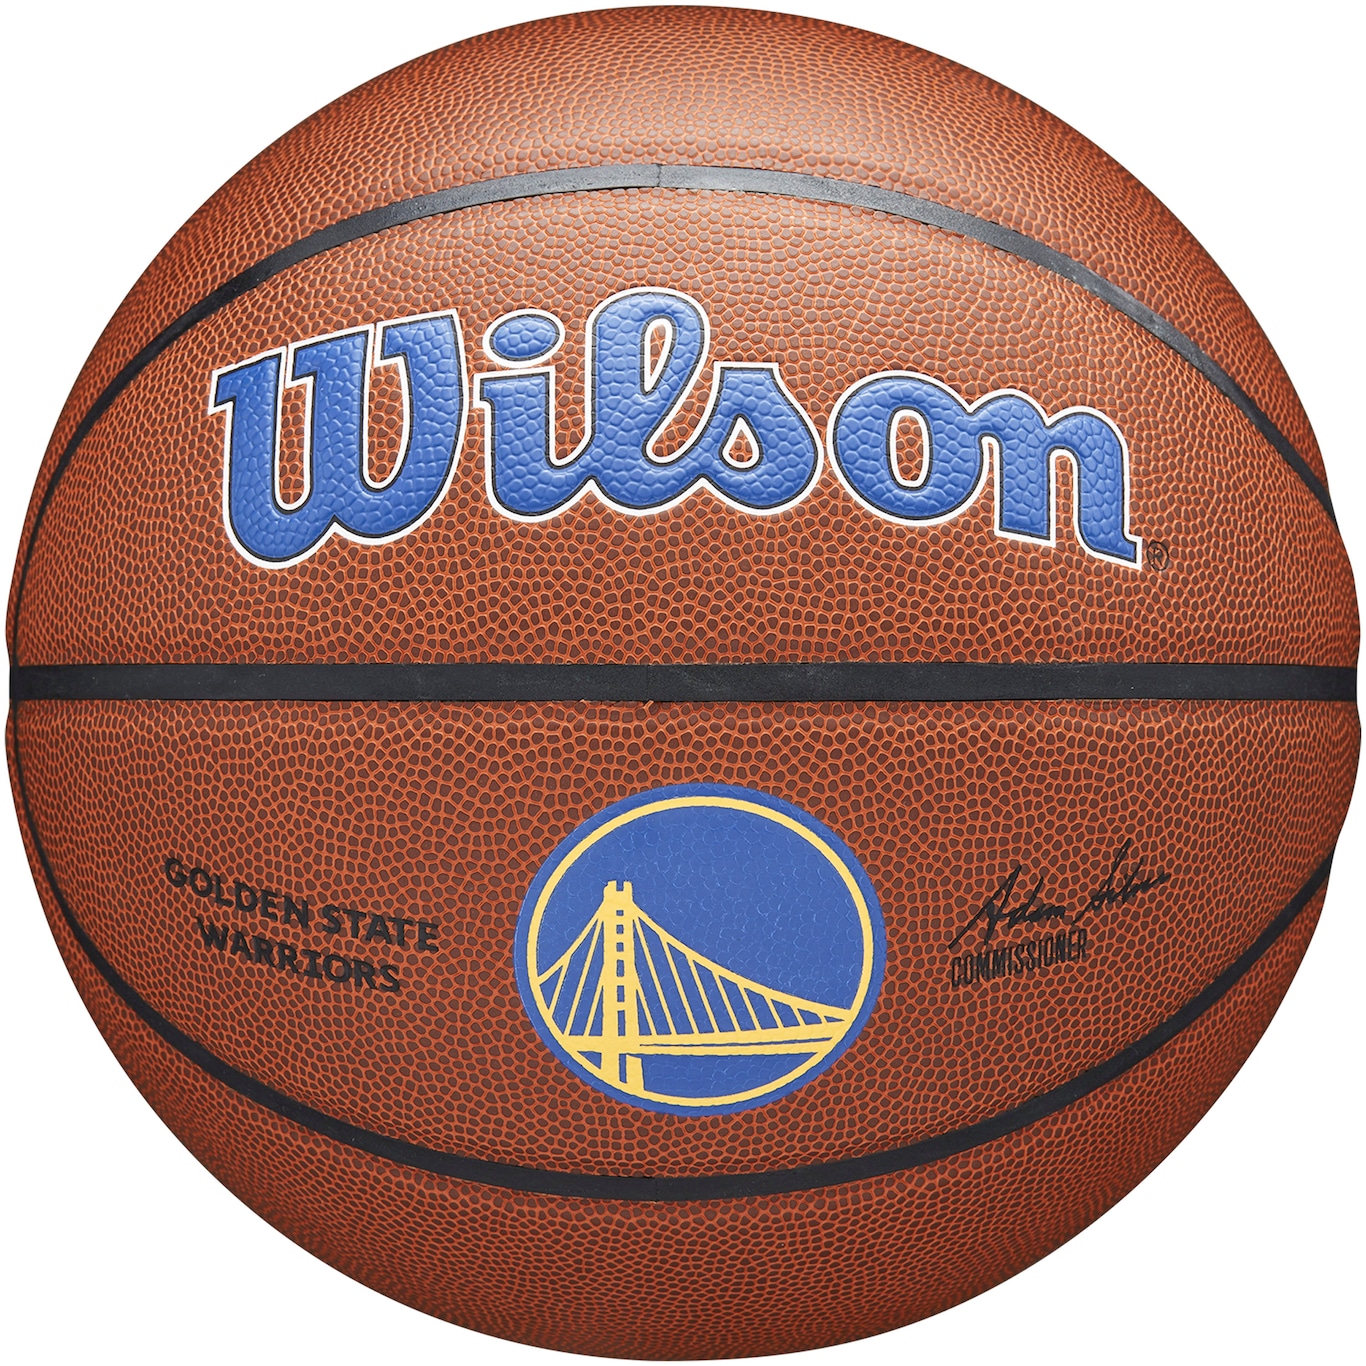 Bola de Basquete Wilson NBA DVR Pro #7 - Marrom